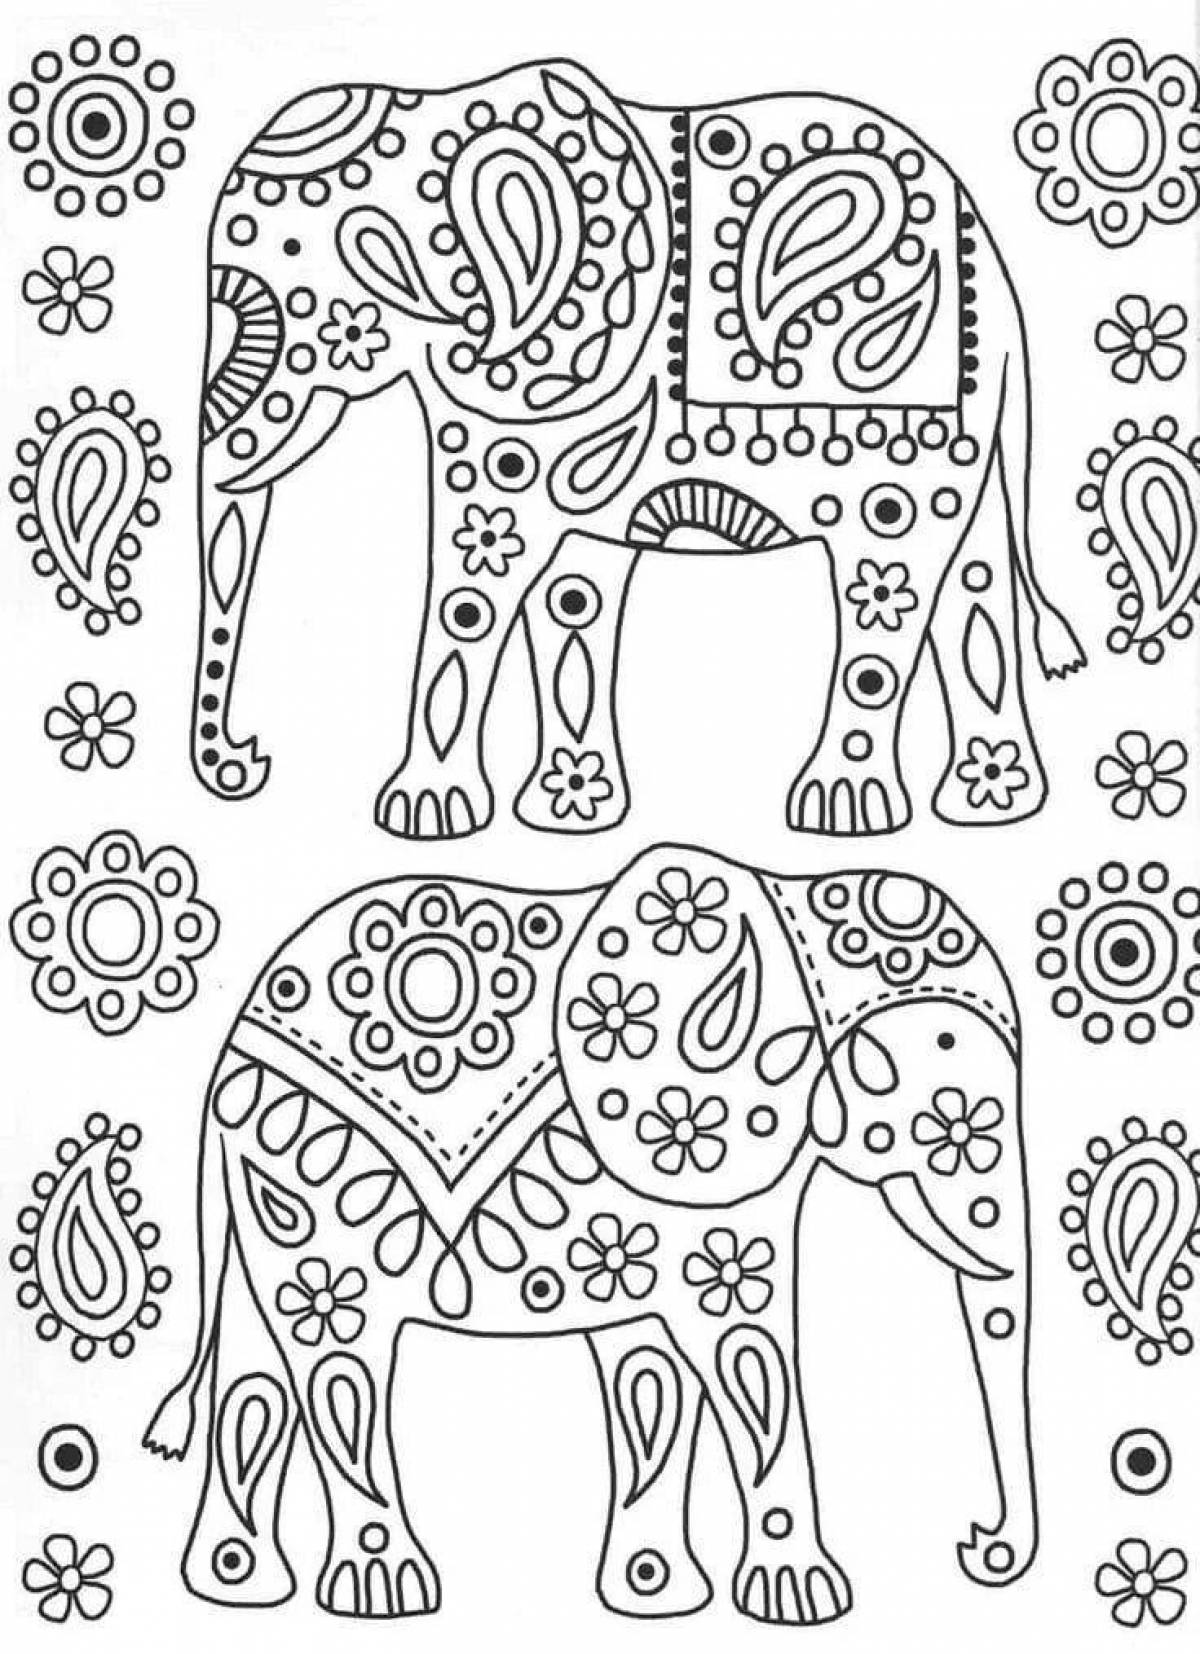 Sublime coloring page индийский слон